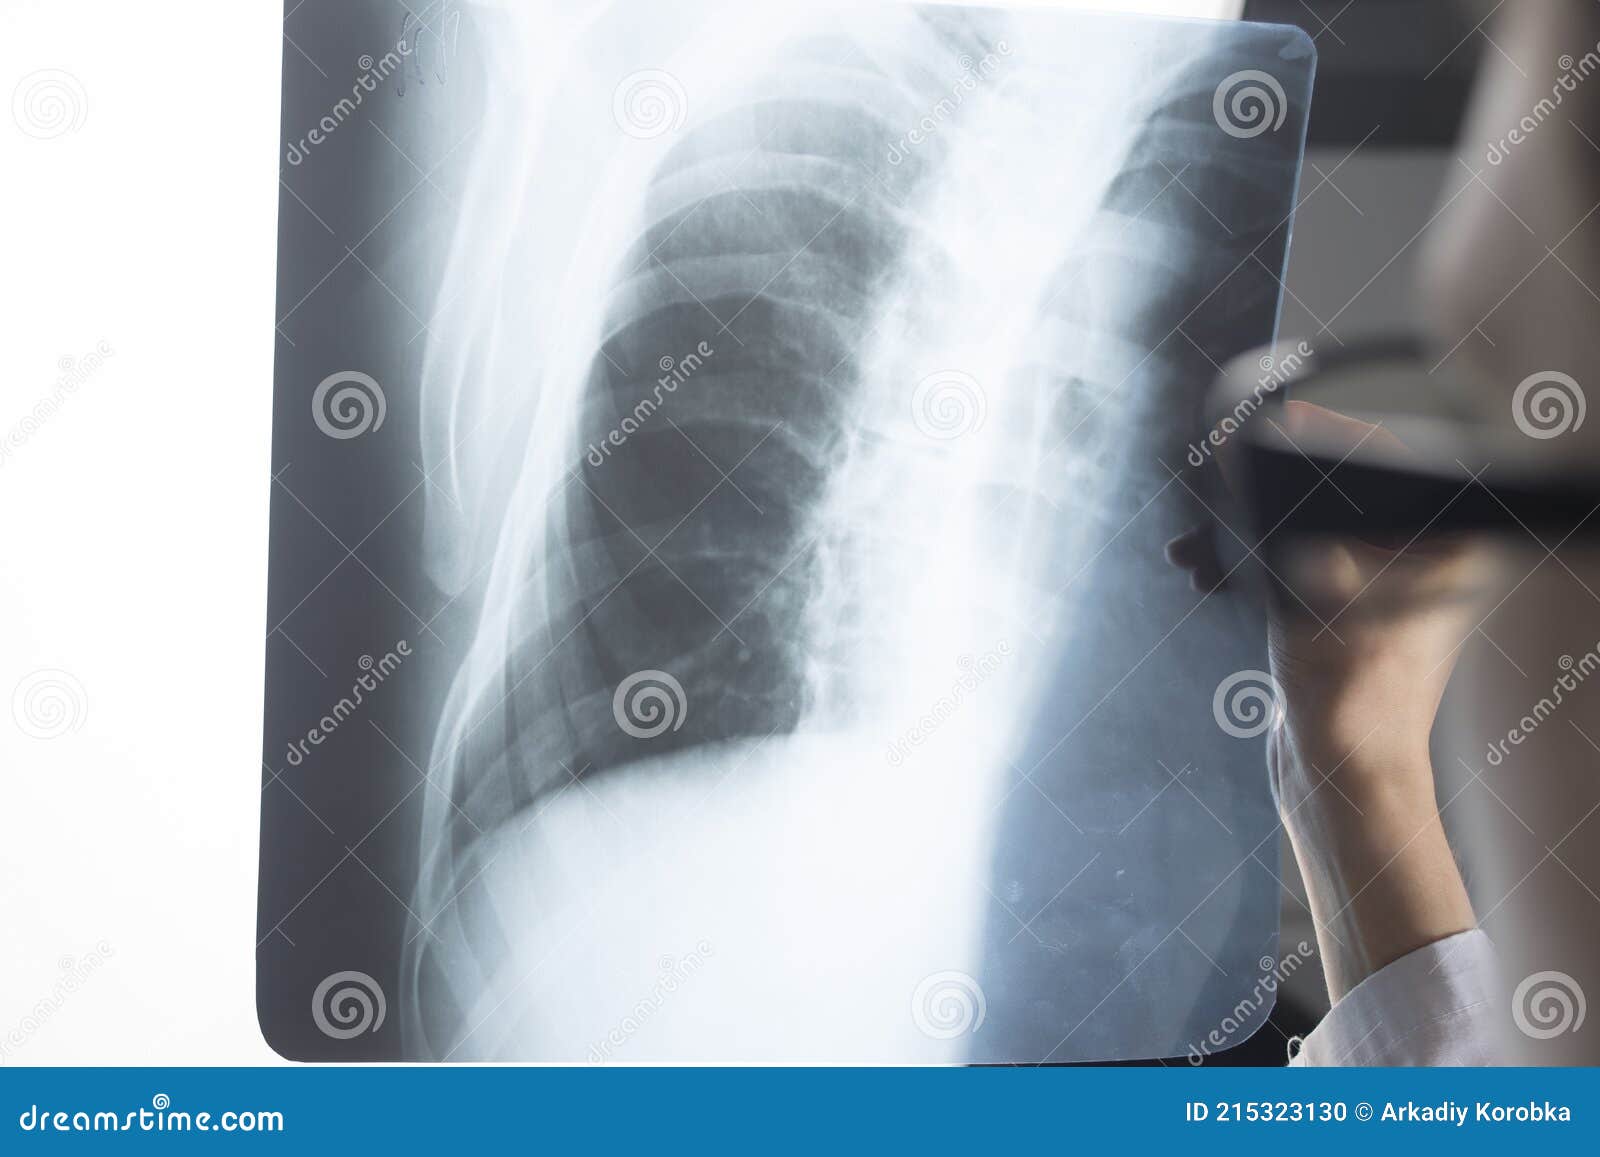 traumatology surgeon roentgenogram x-ray